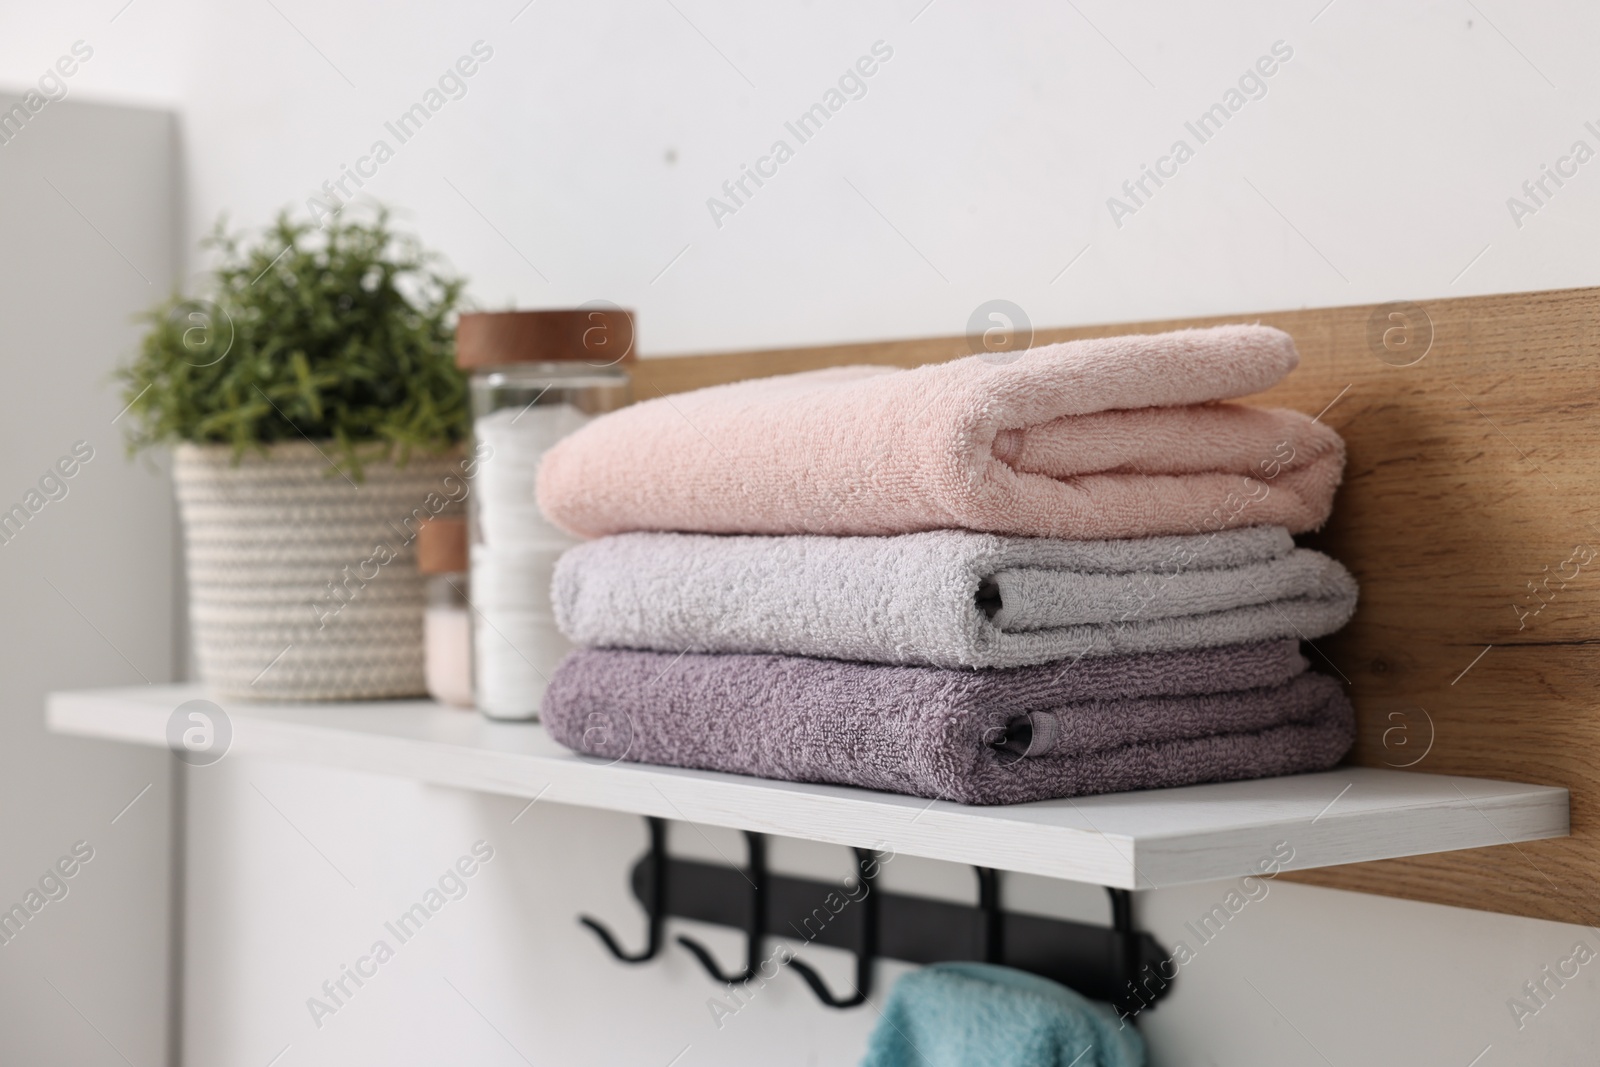 Photo of Fresh towels, houseplant and toiletries on shelf indoors